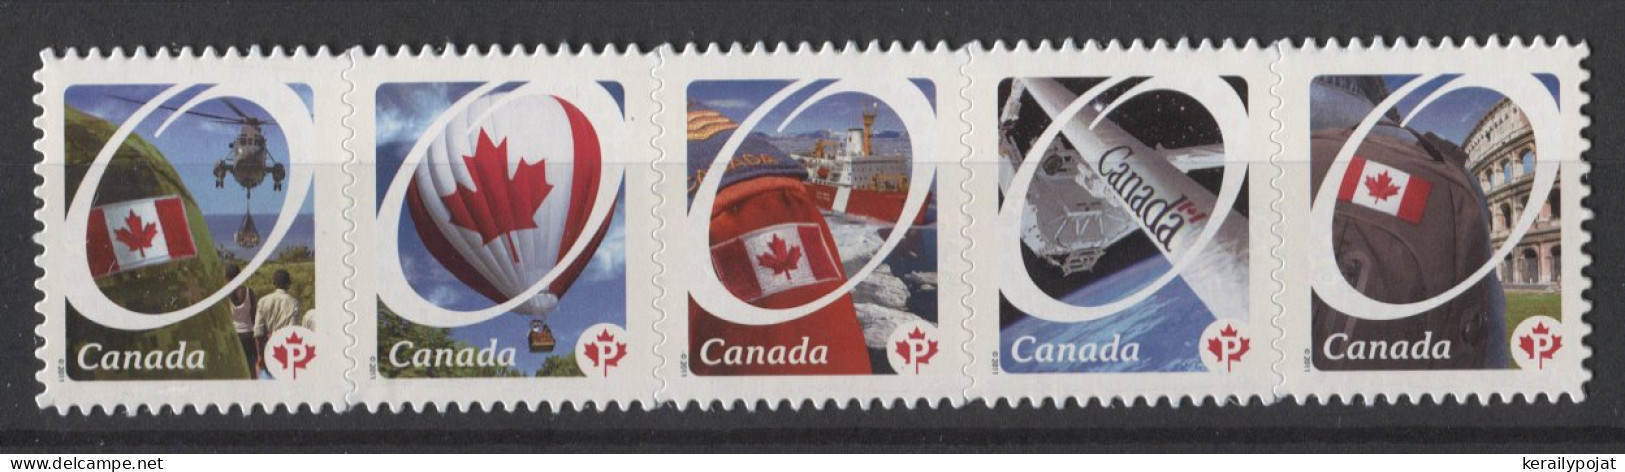 Canada - 2011 National Flag Self-adhesive MNH__(TH-24849) - Ongebruikt